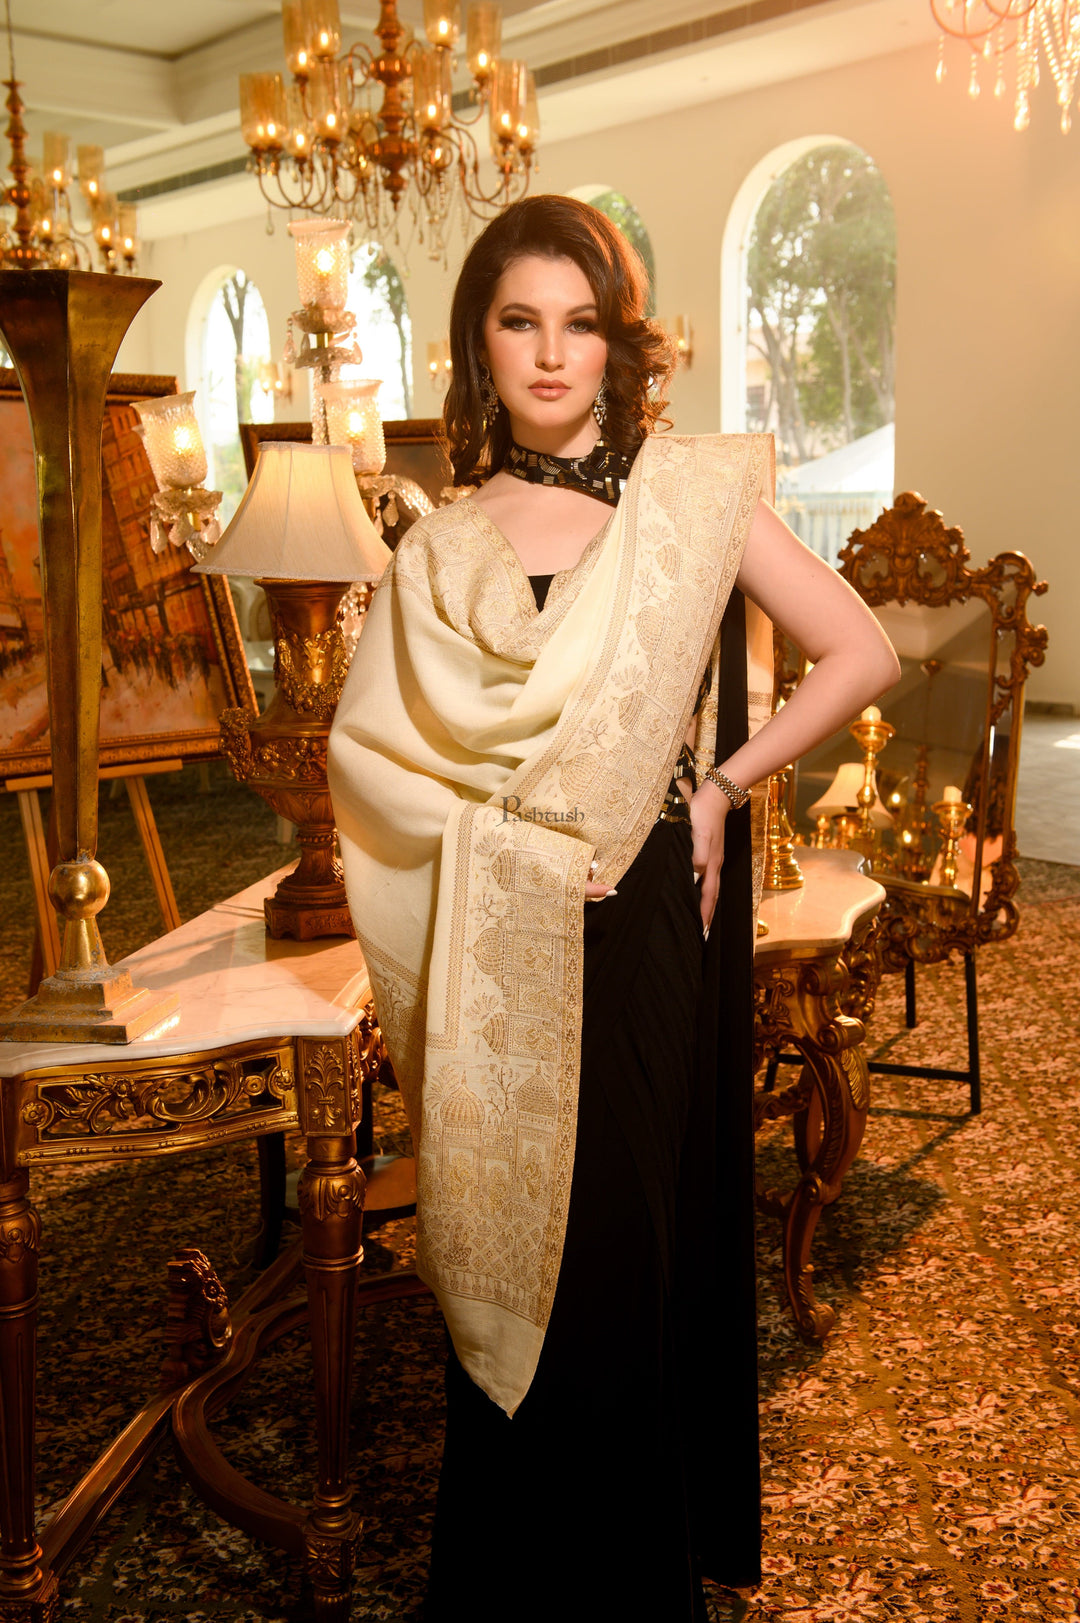 Pashtush India Womens Shawls Pashtush Womens Fine Wool Shawl, Twilight Collection, Persian Palace Dreams Design, Ivory